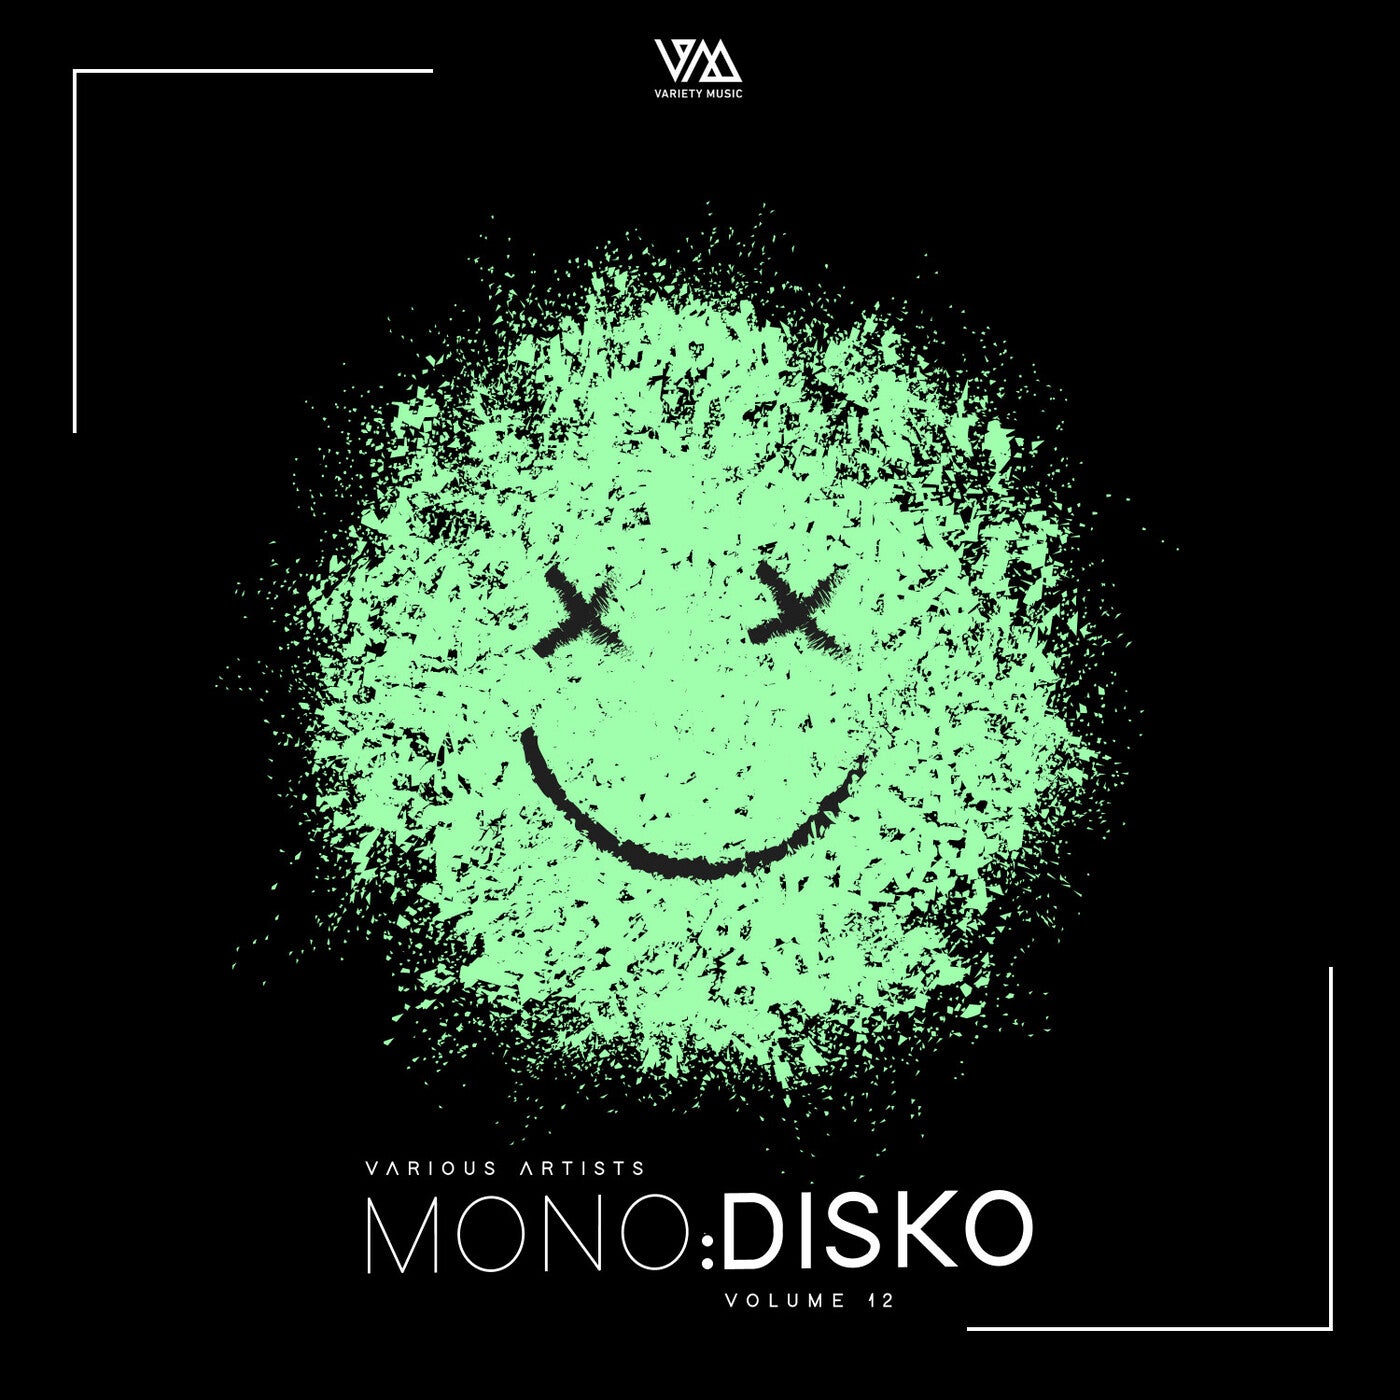 Mono:Disko Vol. 12